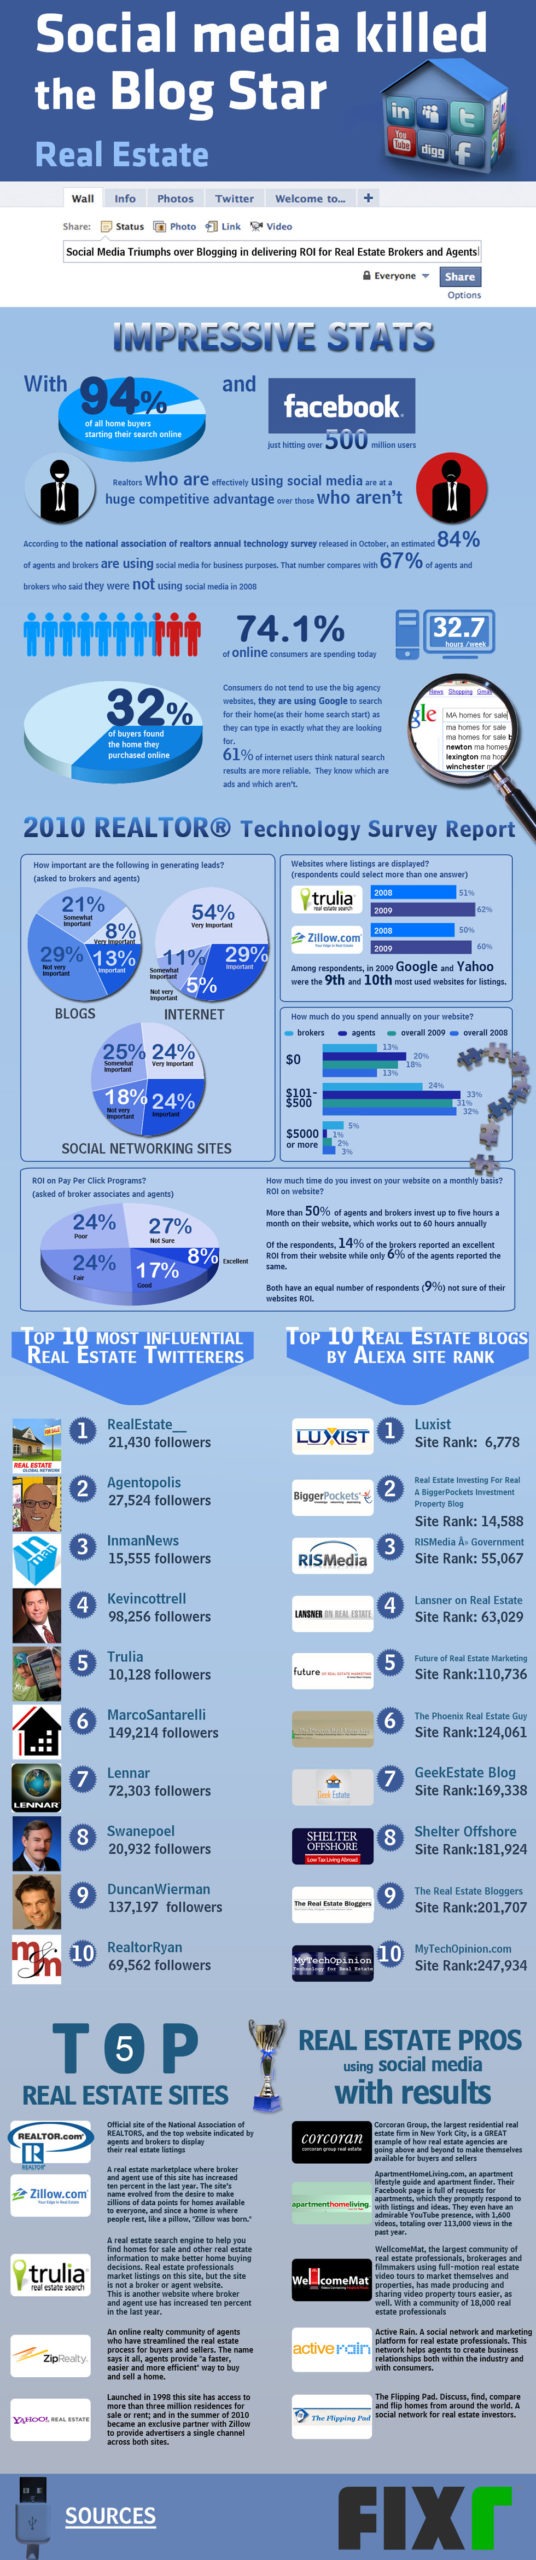 social media real estate infographic